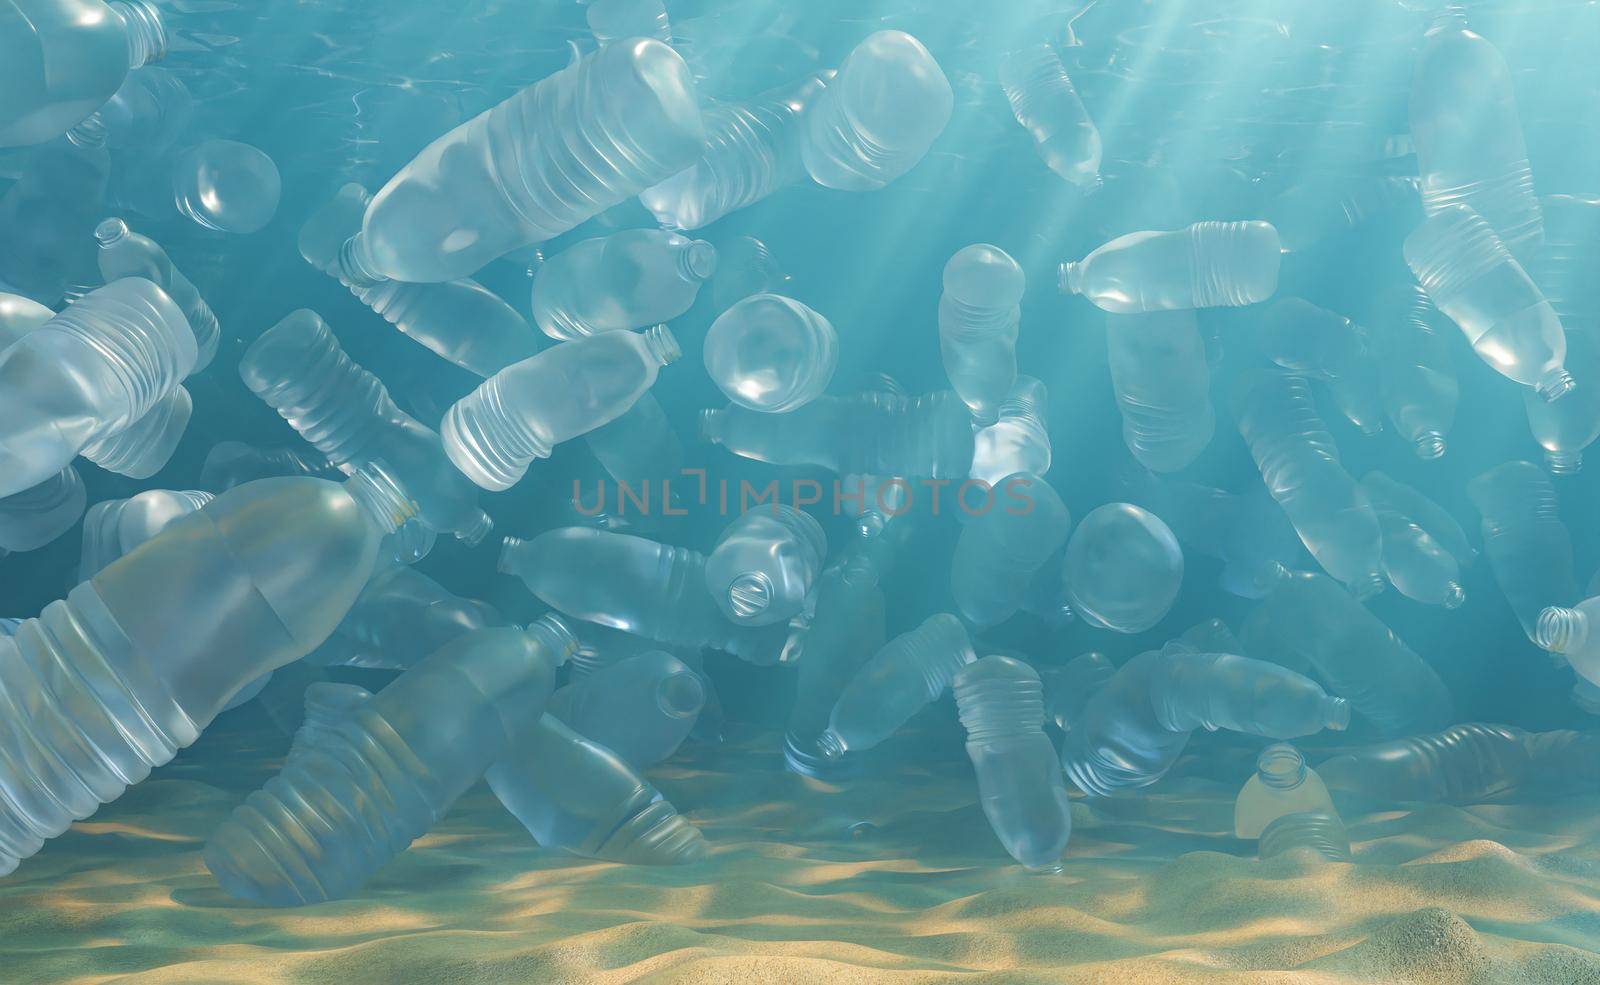 Abundance of plastic bottles in water by asolano